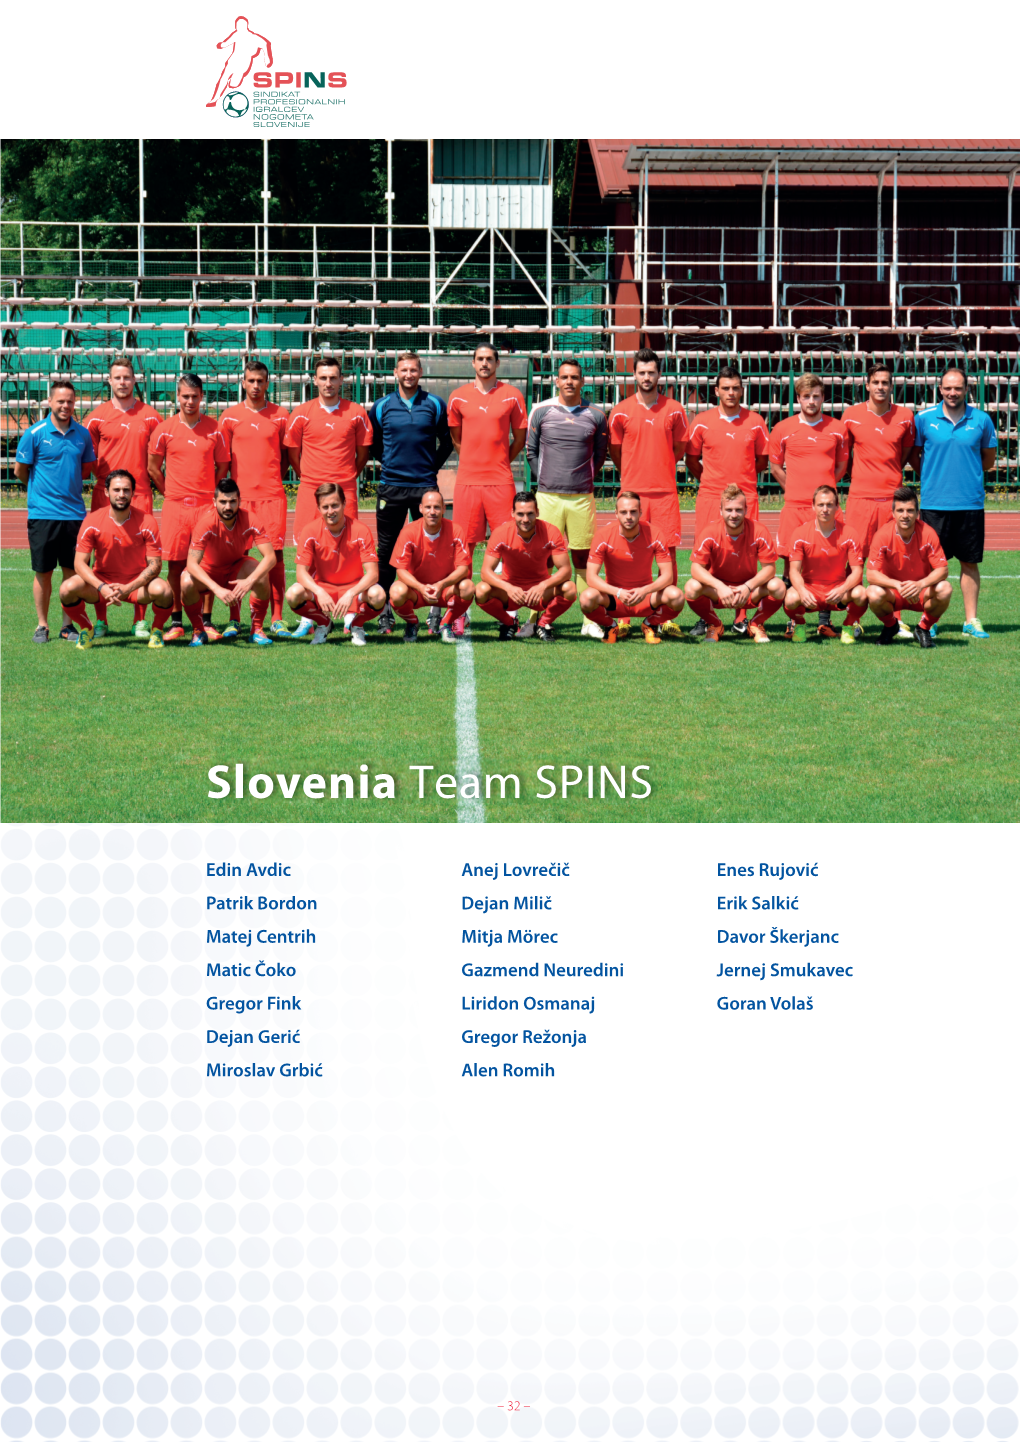 Slovenia Team SPINS